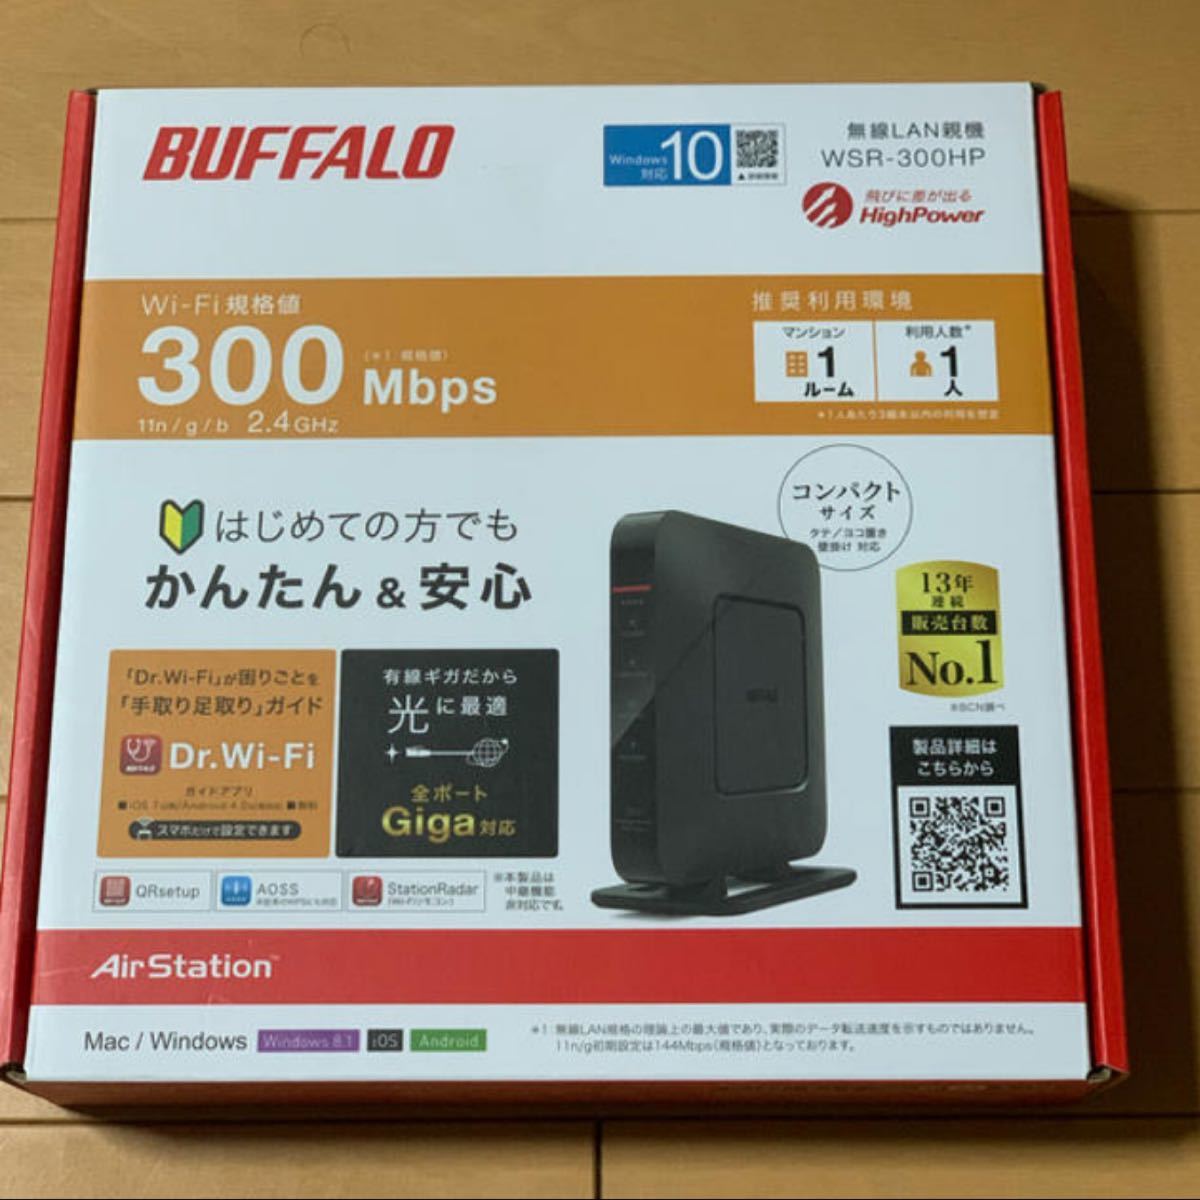 BUFFALO 無線LANルーター WSR-300HP WiFi